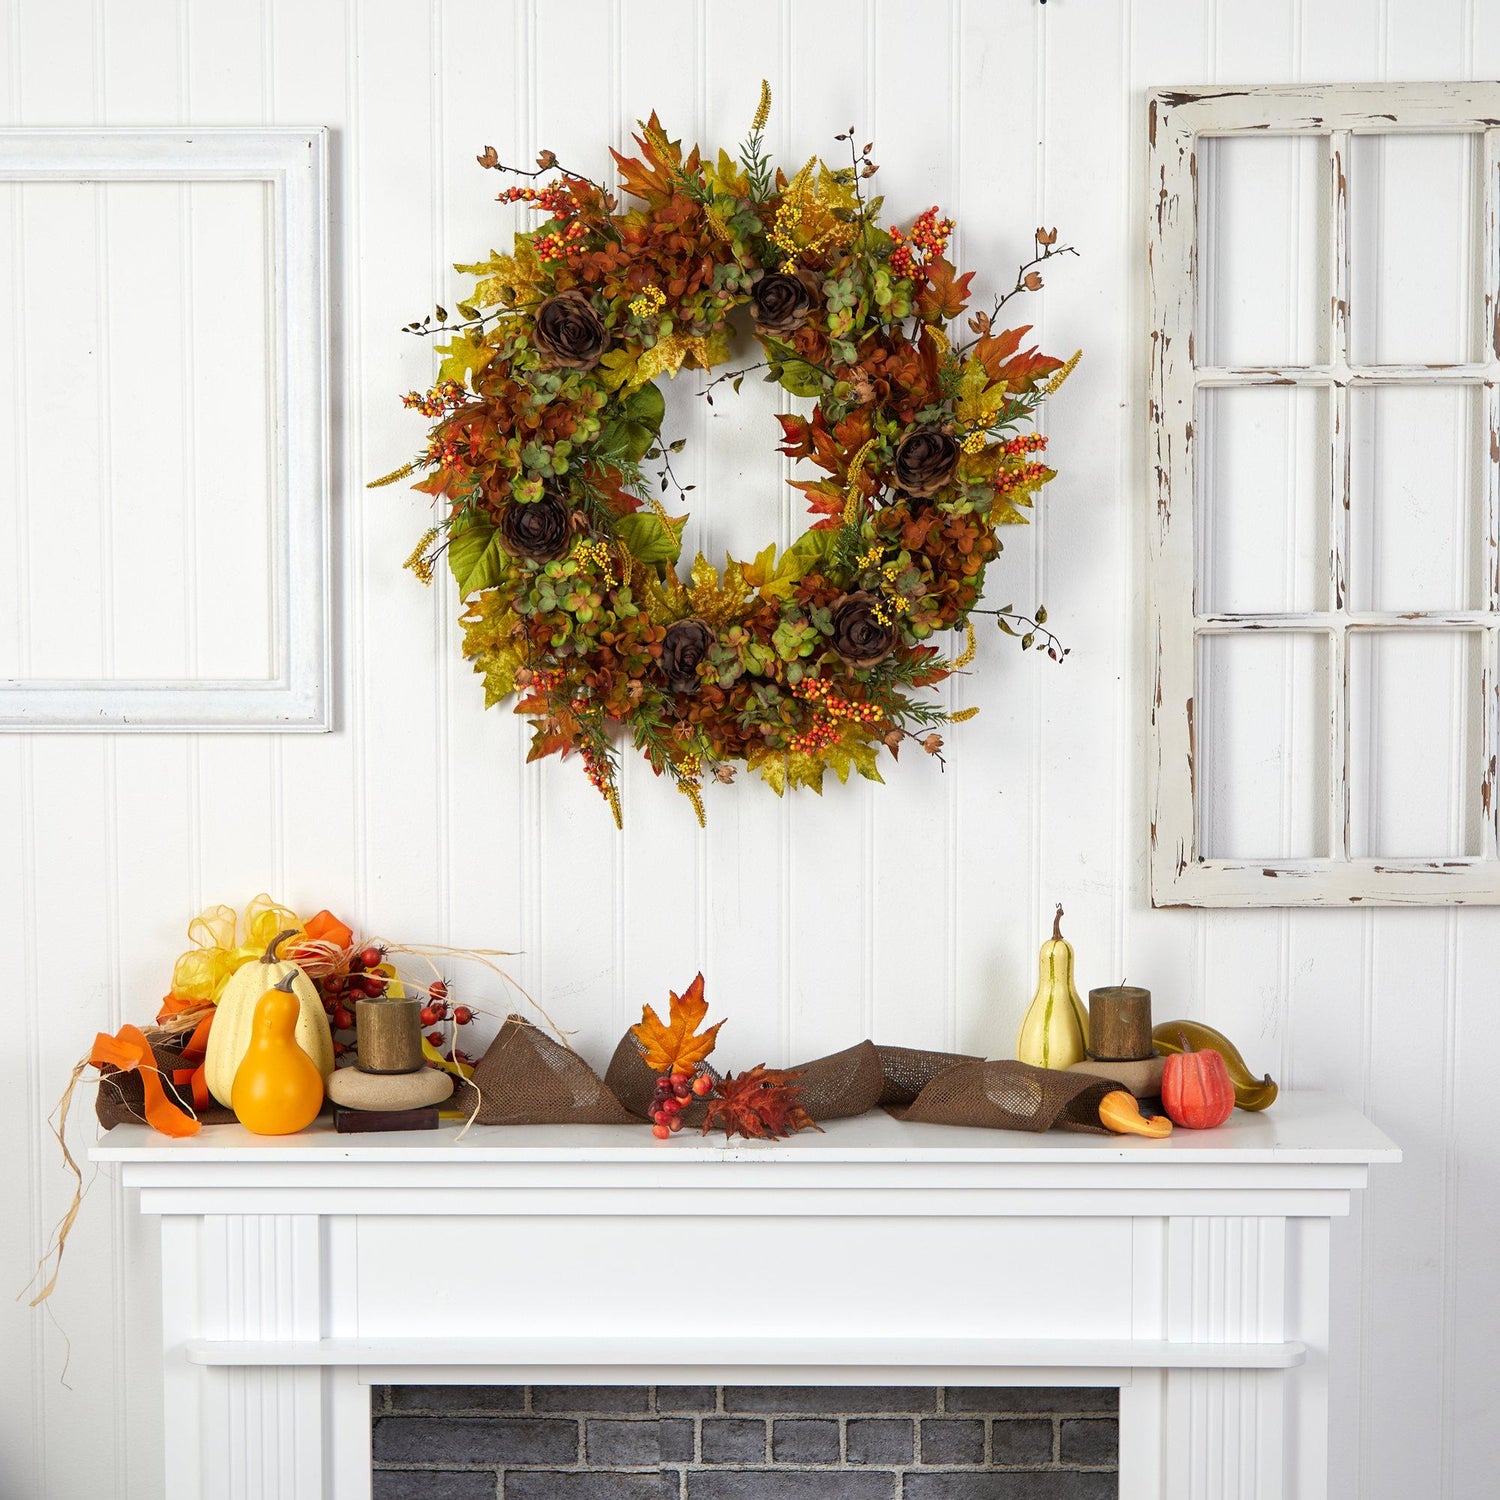 32” Fall Hydrangea, Ranunculus and Maple Leaf Autumn Artificial Wreath